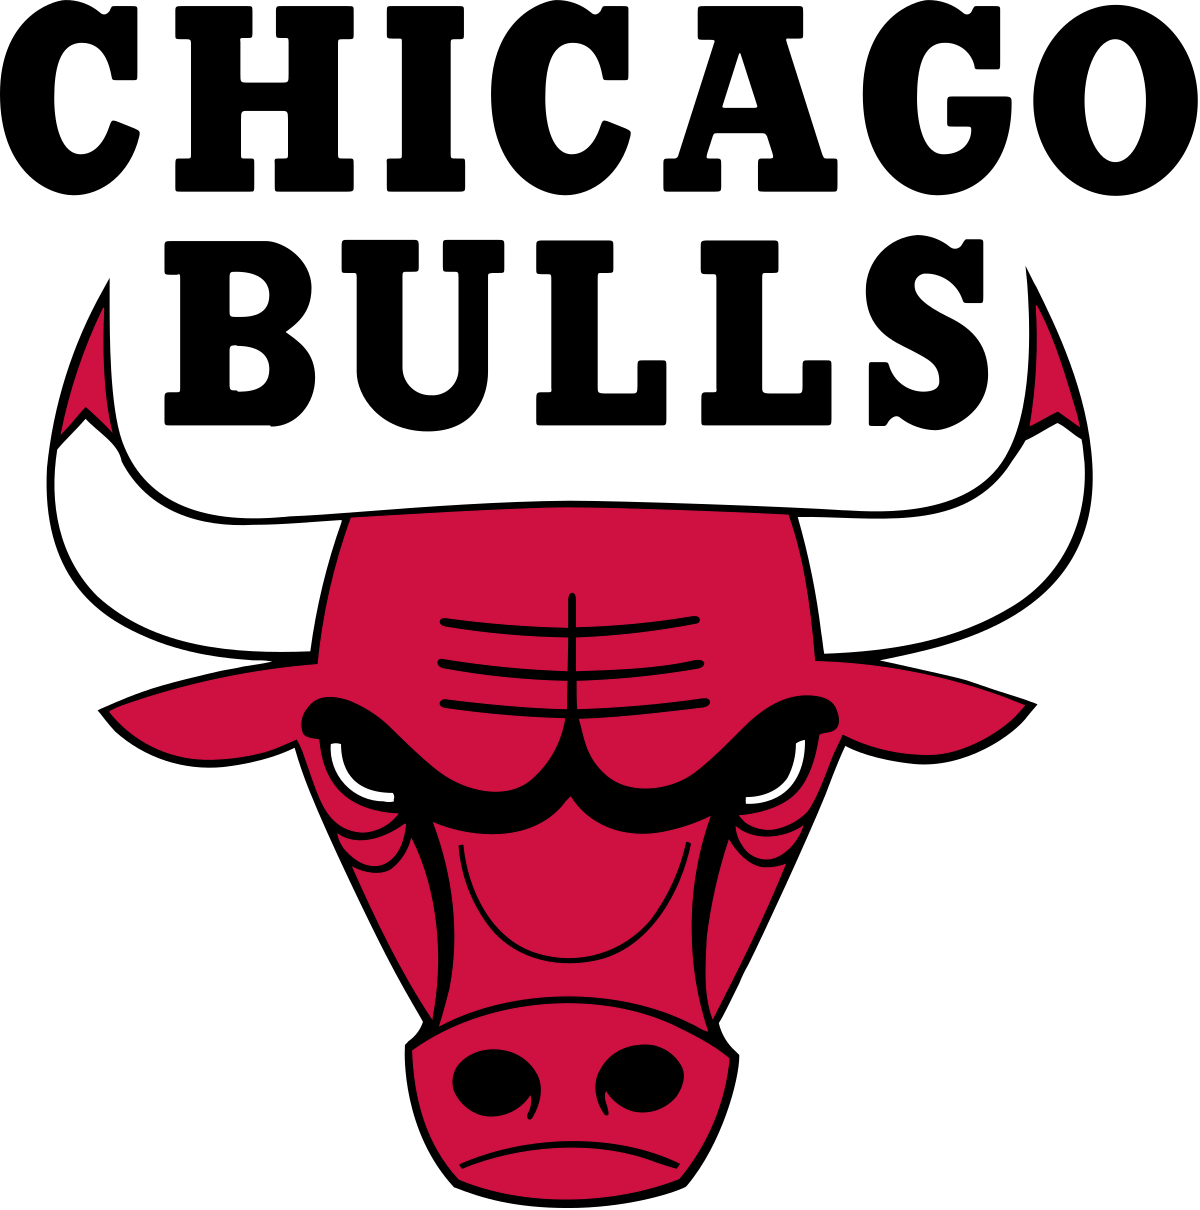 Chicago Bulls (Central Division)